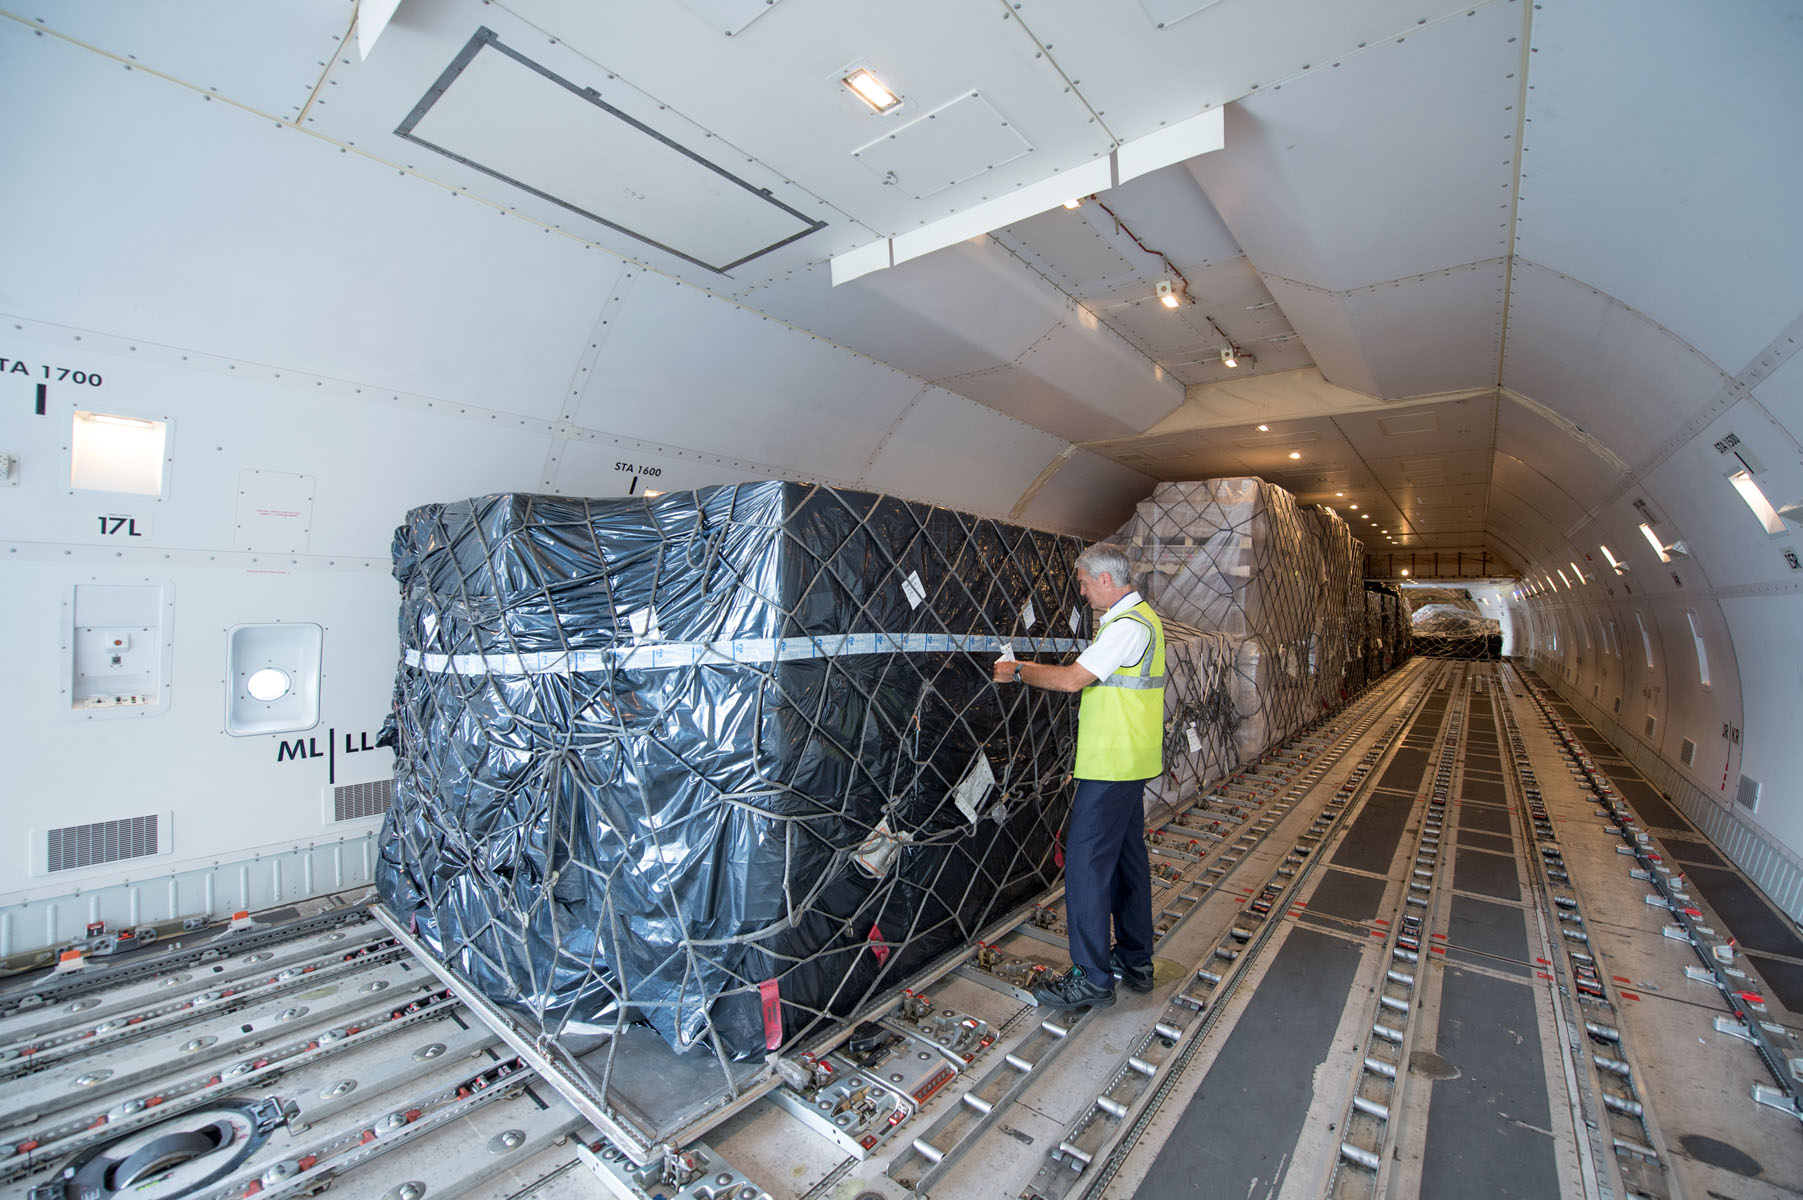 Heathrow Airport, cargo terminal, CargoLogicAir 747-83Q(F) interior of cargo hold, July 2017. Photo courtesy of Heathrow Airport.